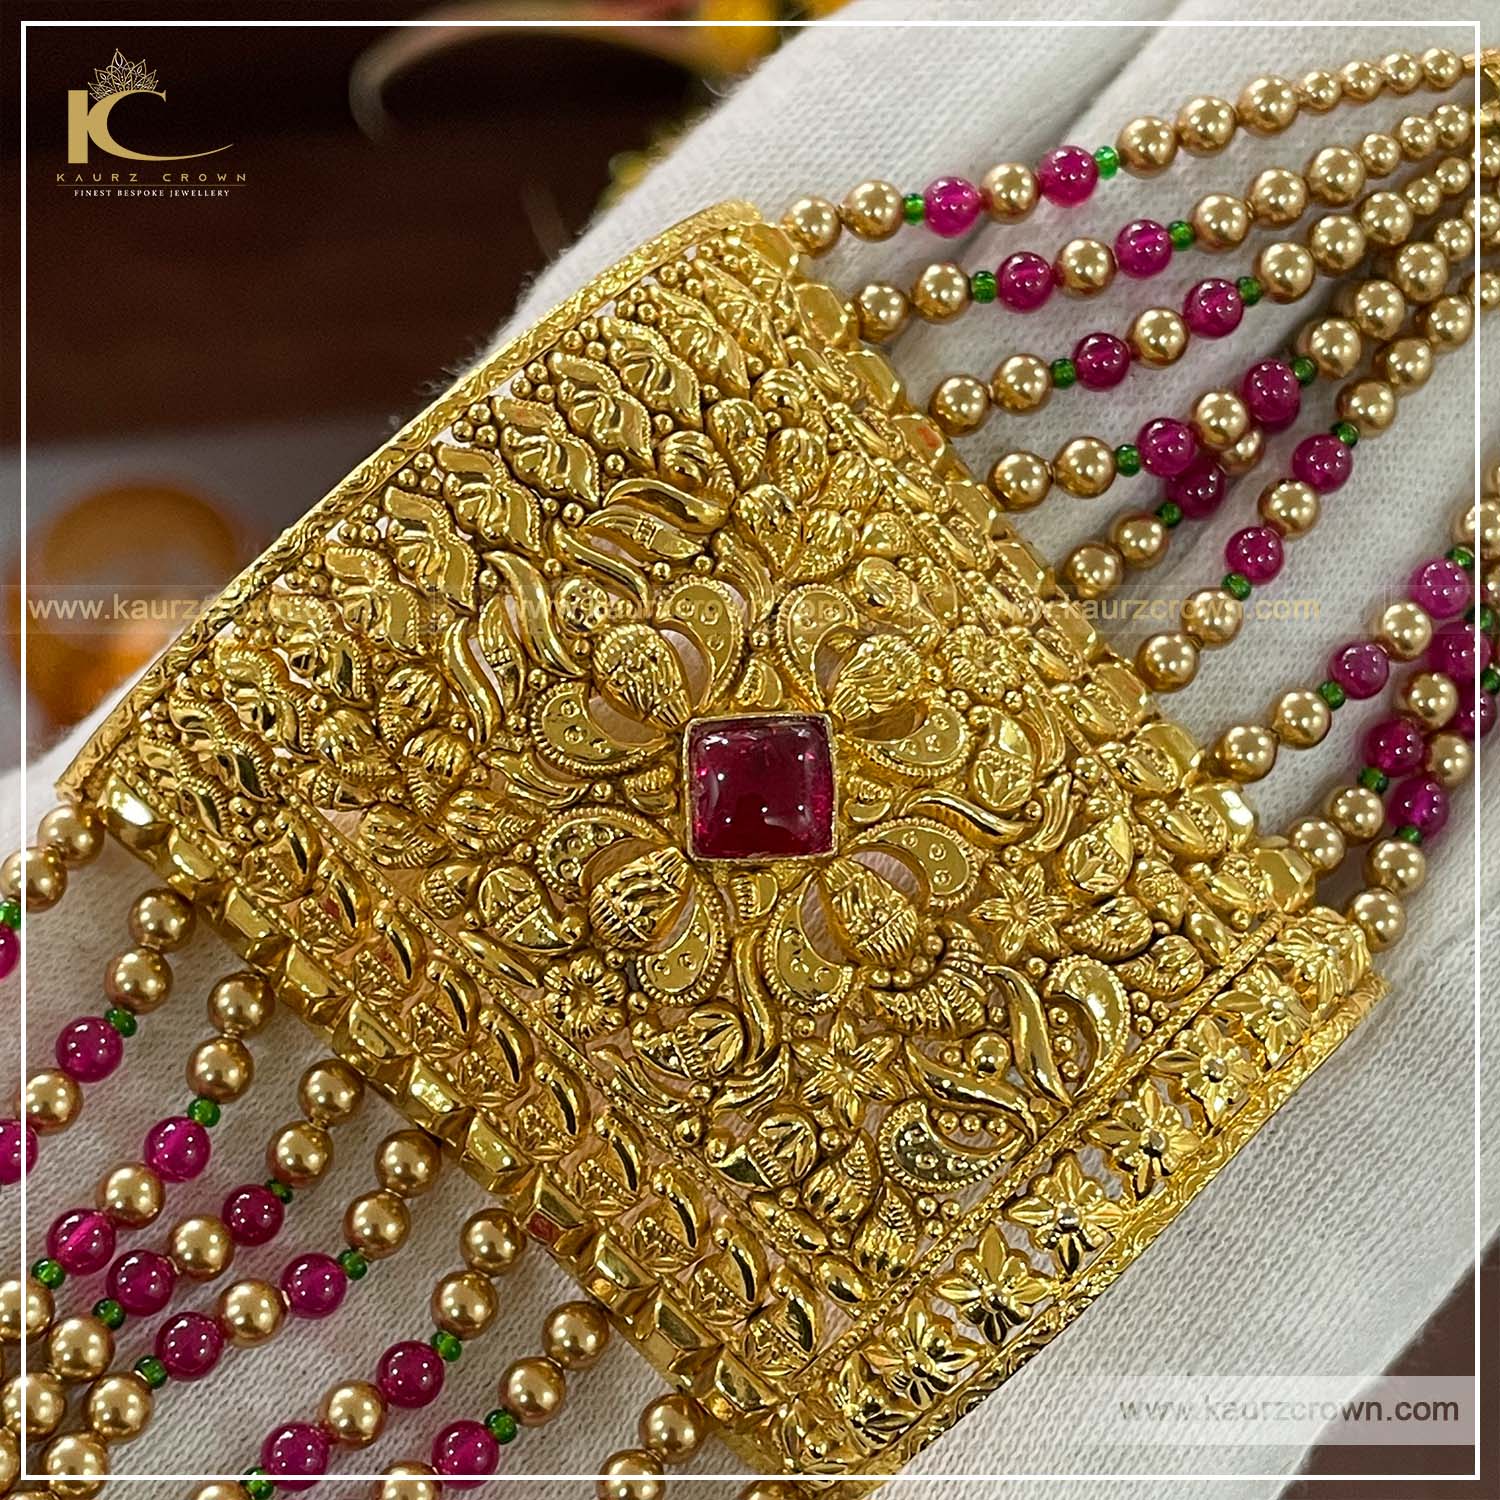 Hazeema Traditional Antique Gold Plated Baahi (Bracelet) , kaurz crown , punjabi jewellery , gold plated , traditional jewellery , hazeema , gold plated baahi